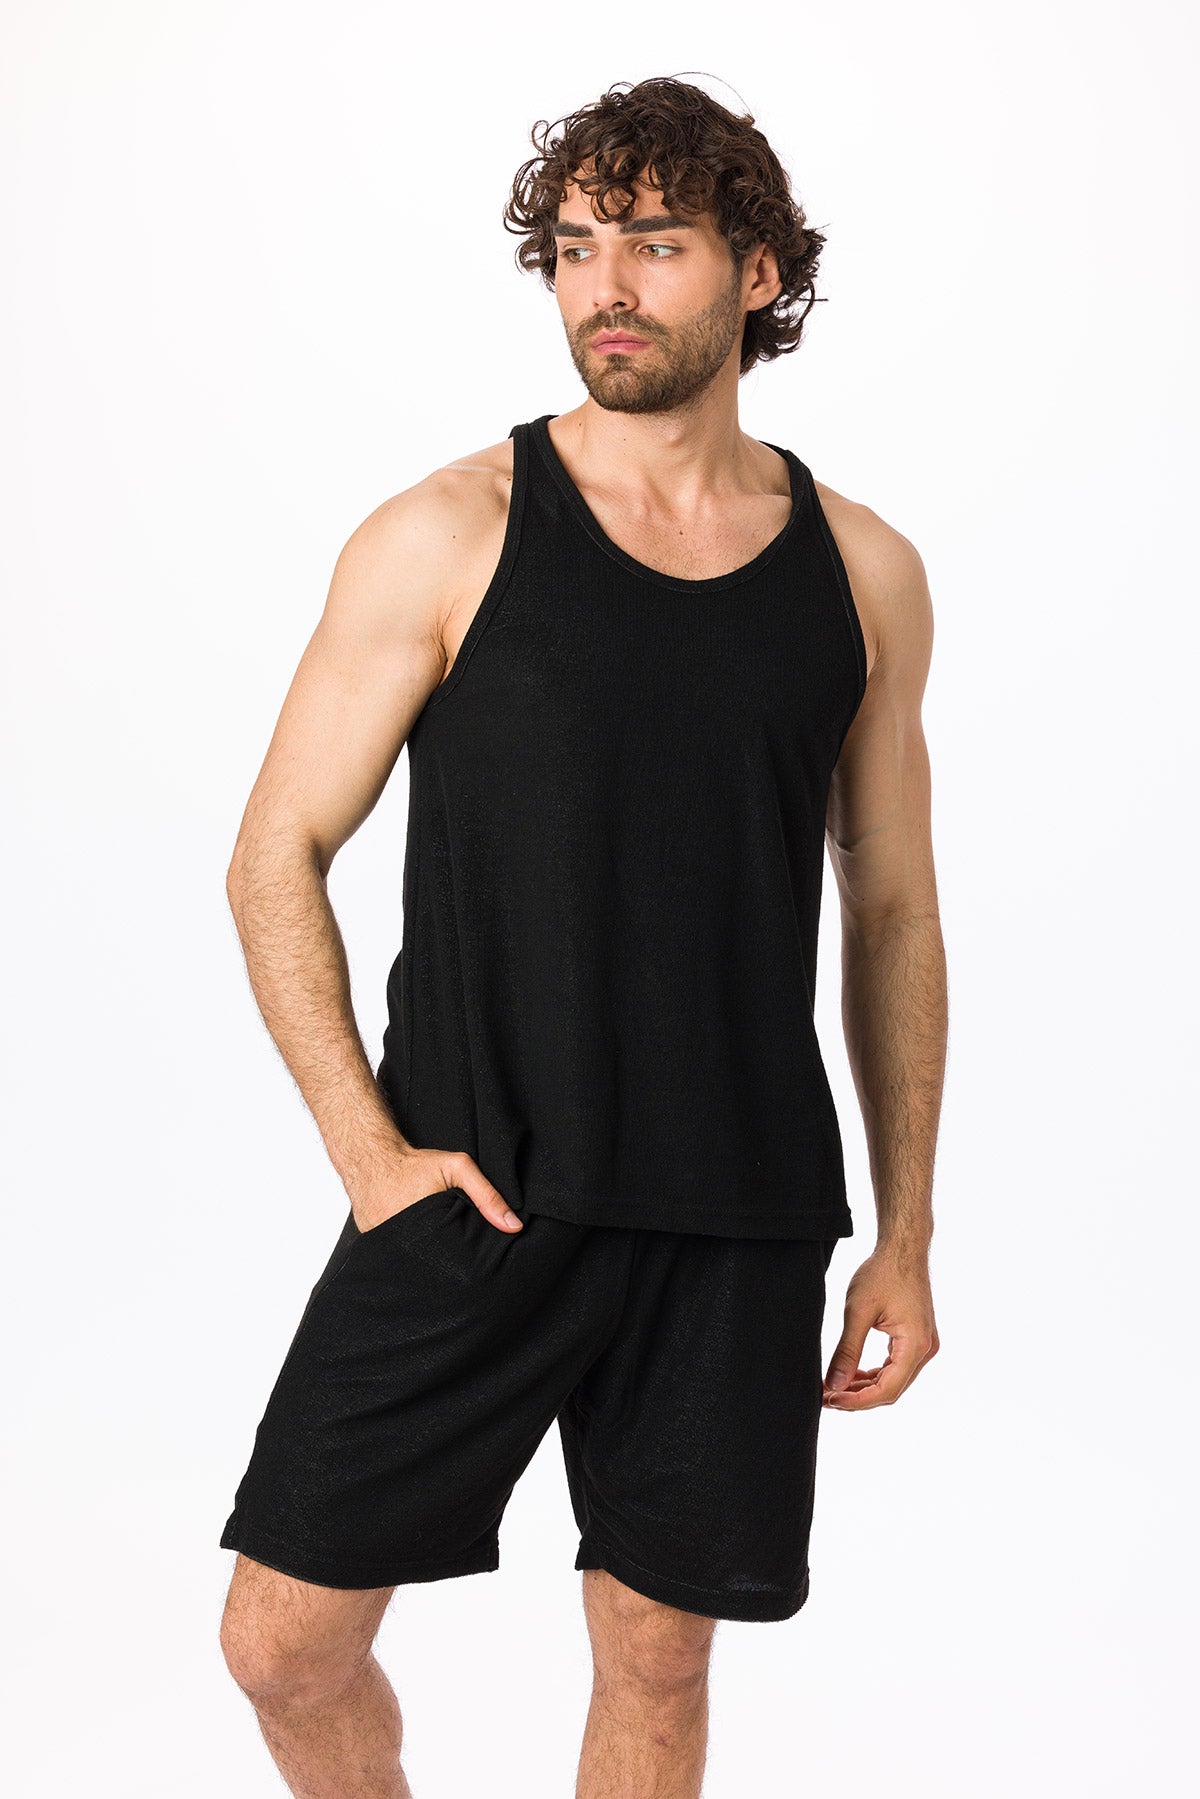 Suvi NYC Men's 2-Set Shorts 100% Turkish Terry cotton 2 Side Pockets Gym. Work Out. Yoga, Fitness. Pajama set.